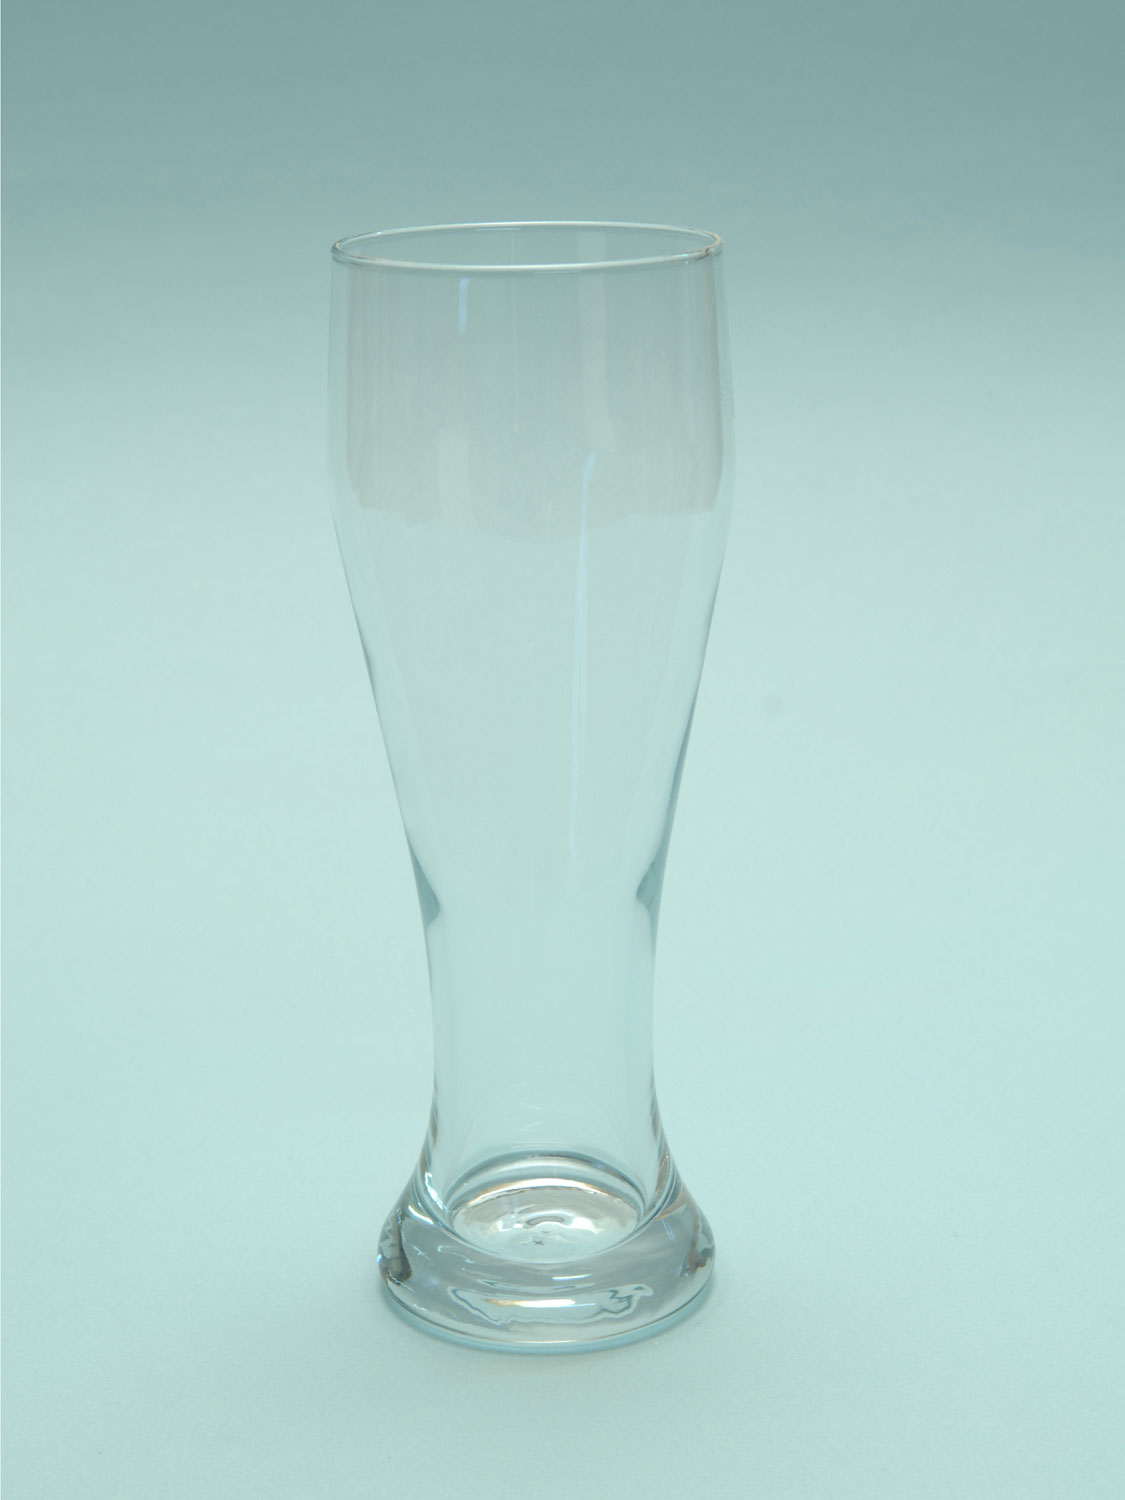 Stunt glass for film. Sugar glass Wheat beer glass 0.5L. Height x width 23 x 8.1 cm.